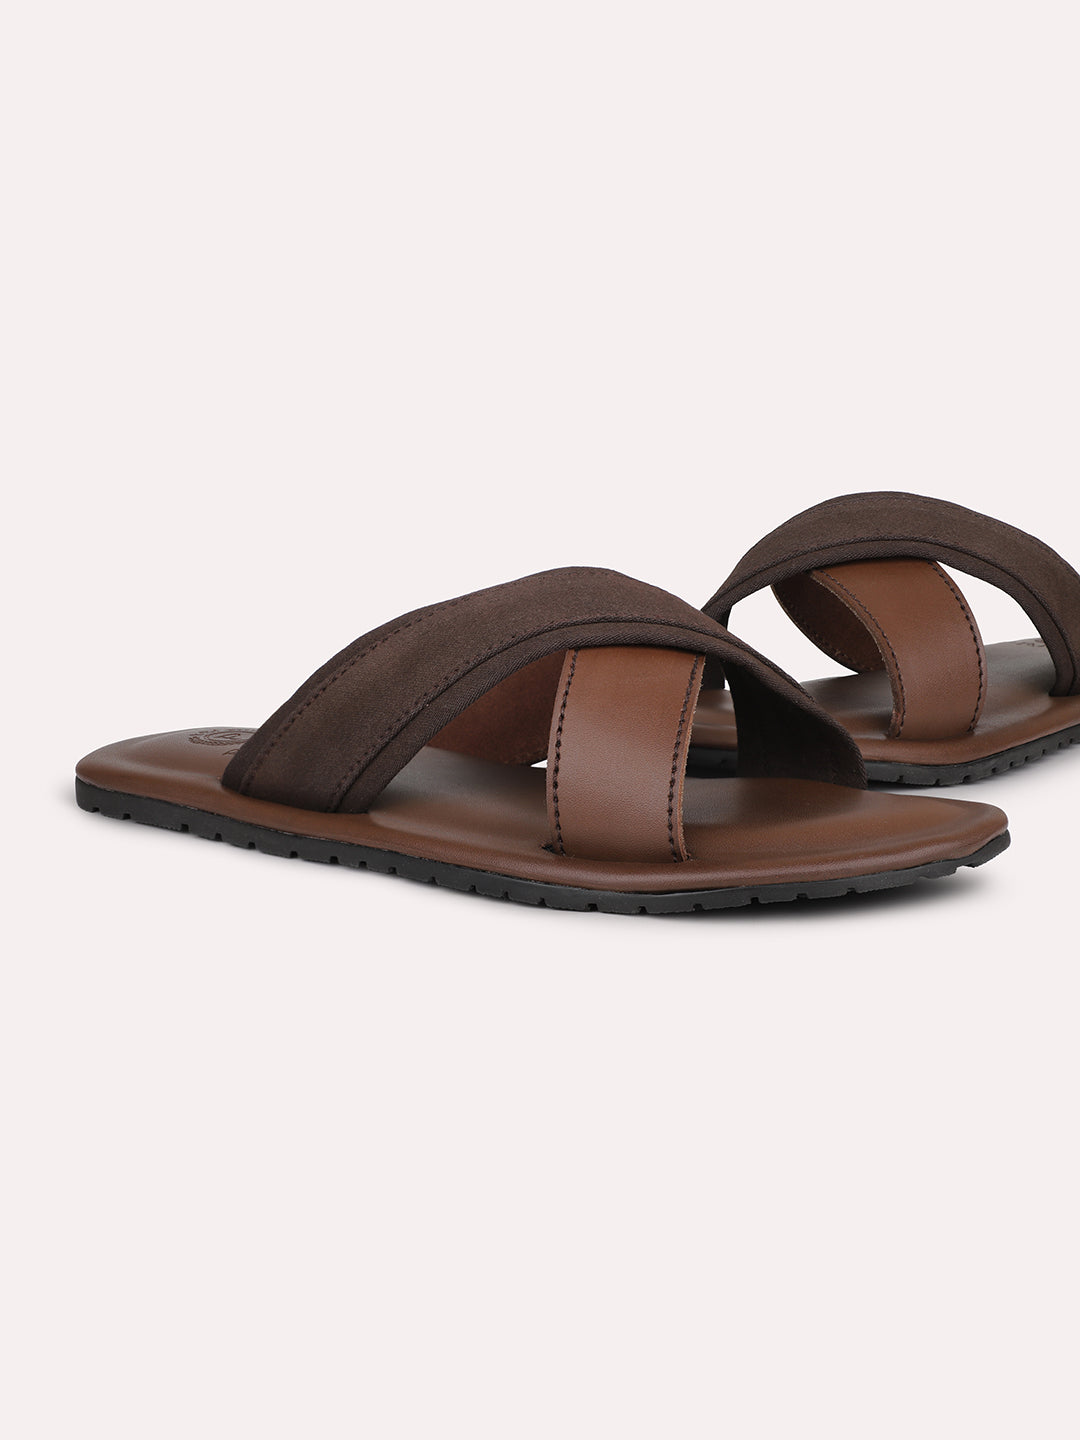 Privo Denim and Brown Casual Sandals For Men